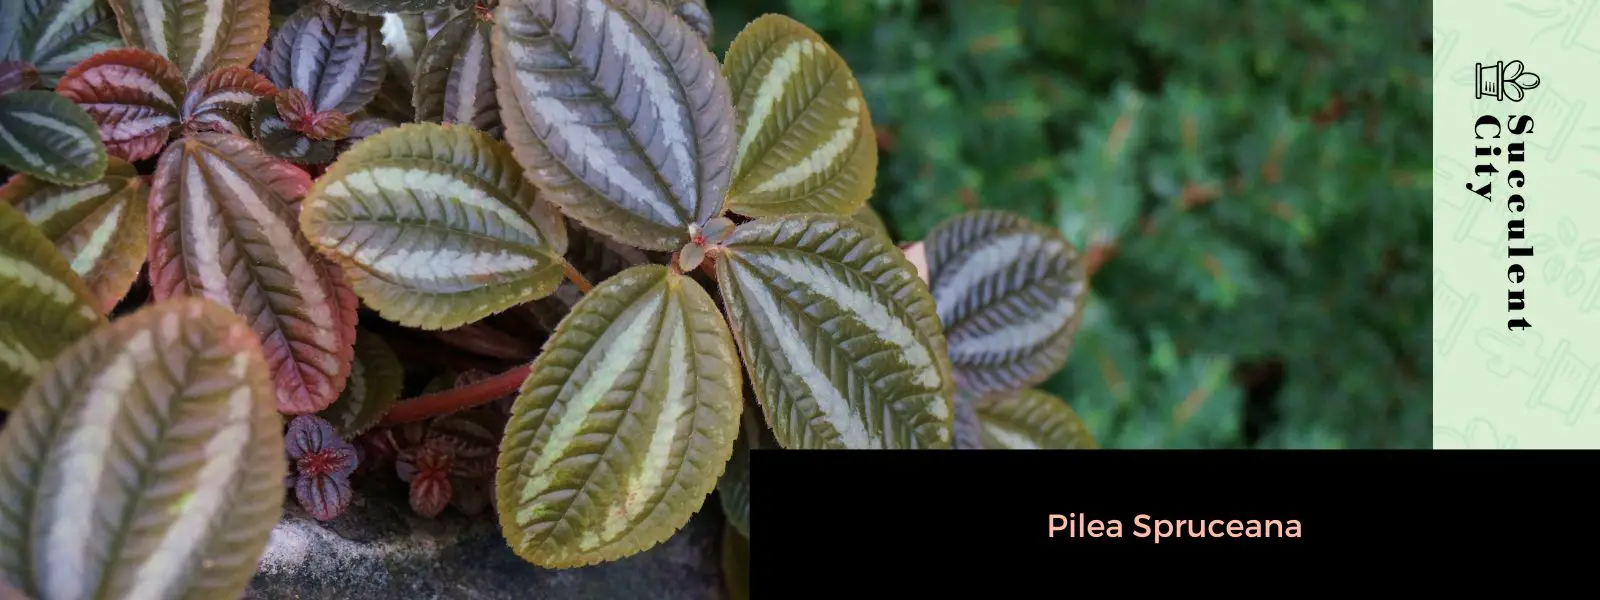 Pilea Spruceana (La planta tricolor de la amistad)